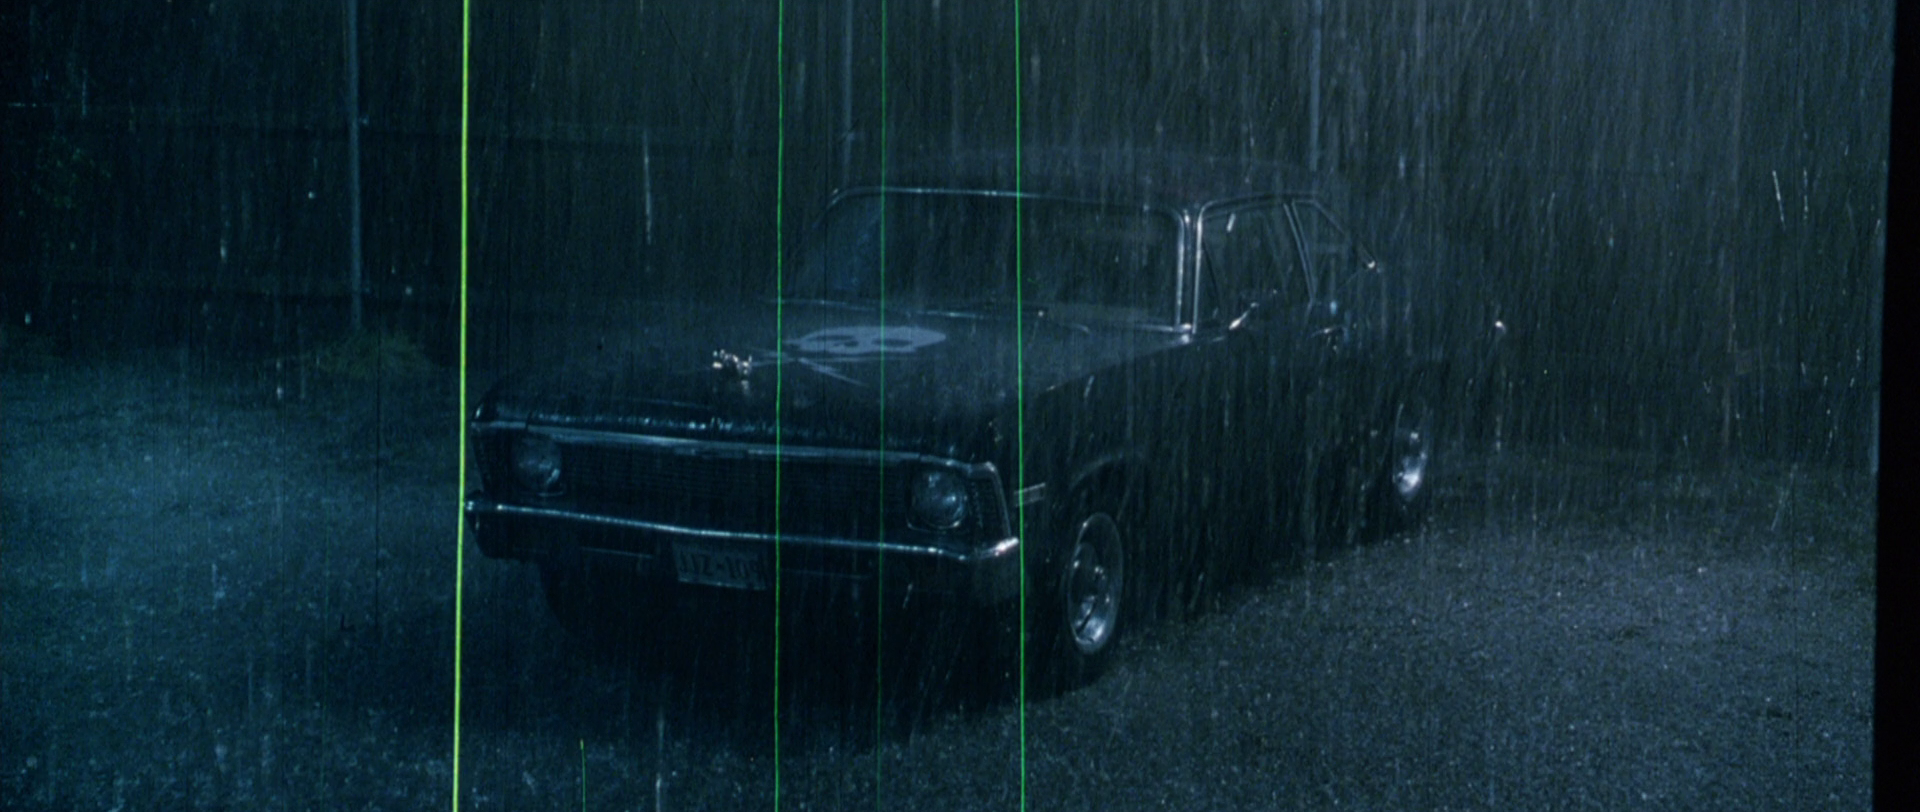 Машина под дождем